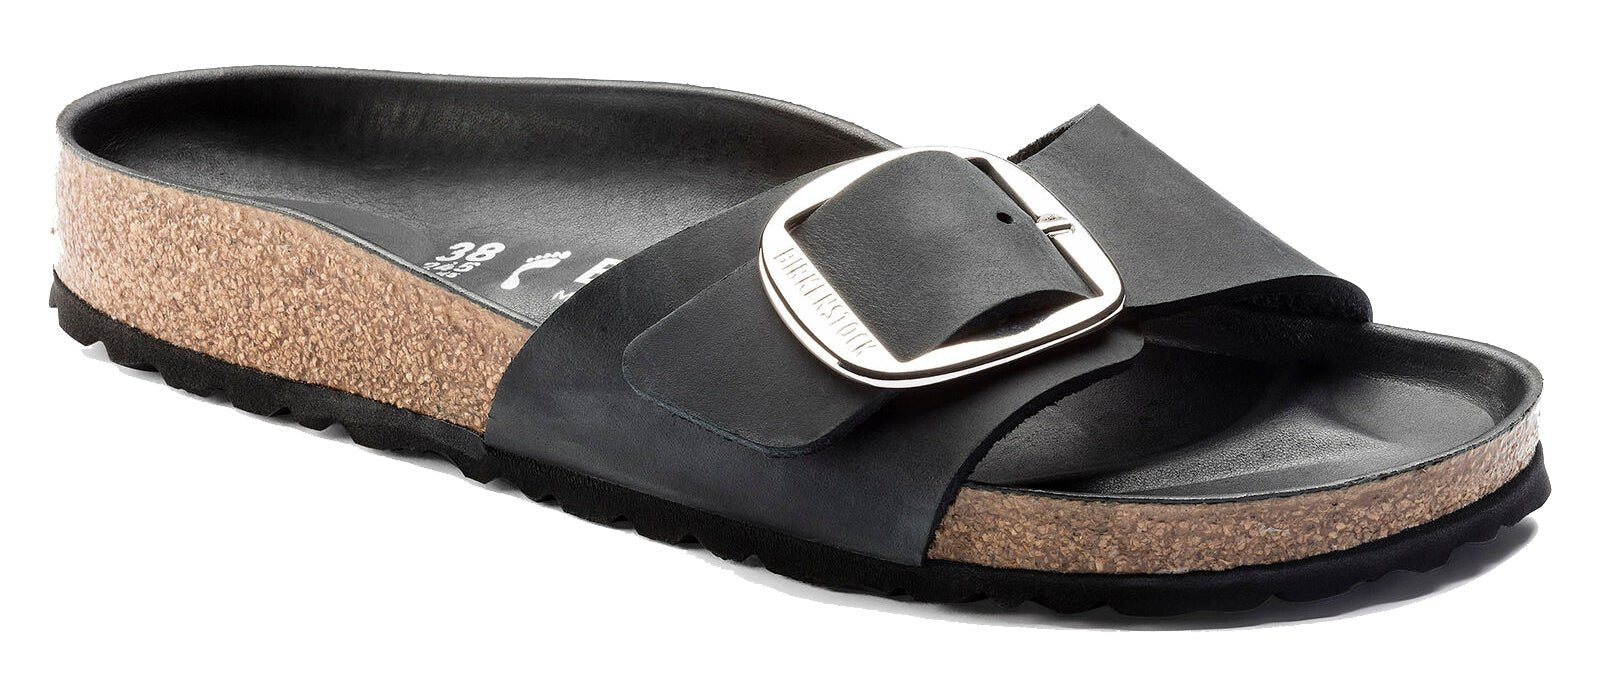 Birkenstock Madrid Big Buckle Black Oiled Leather - Grady’s Feet Essentials - Birkenstock